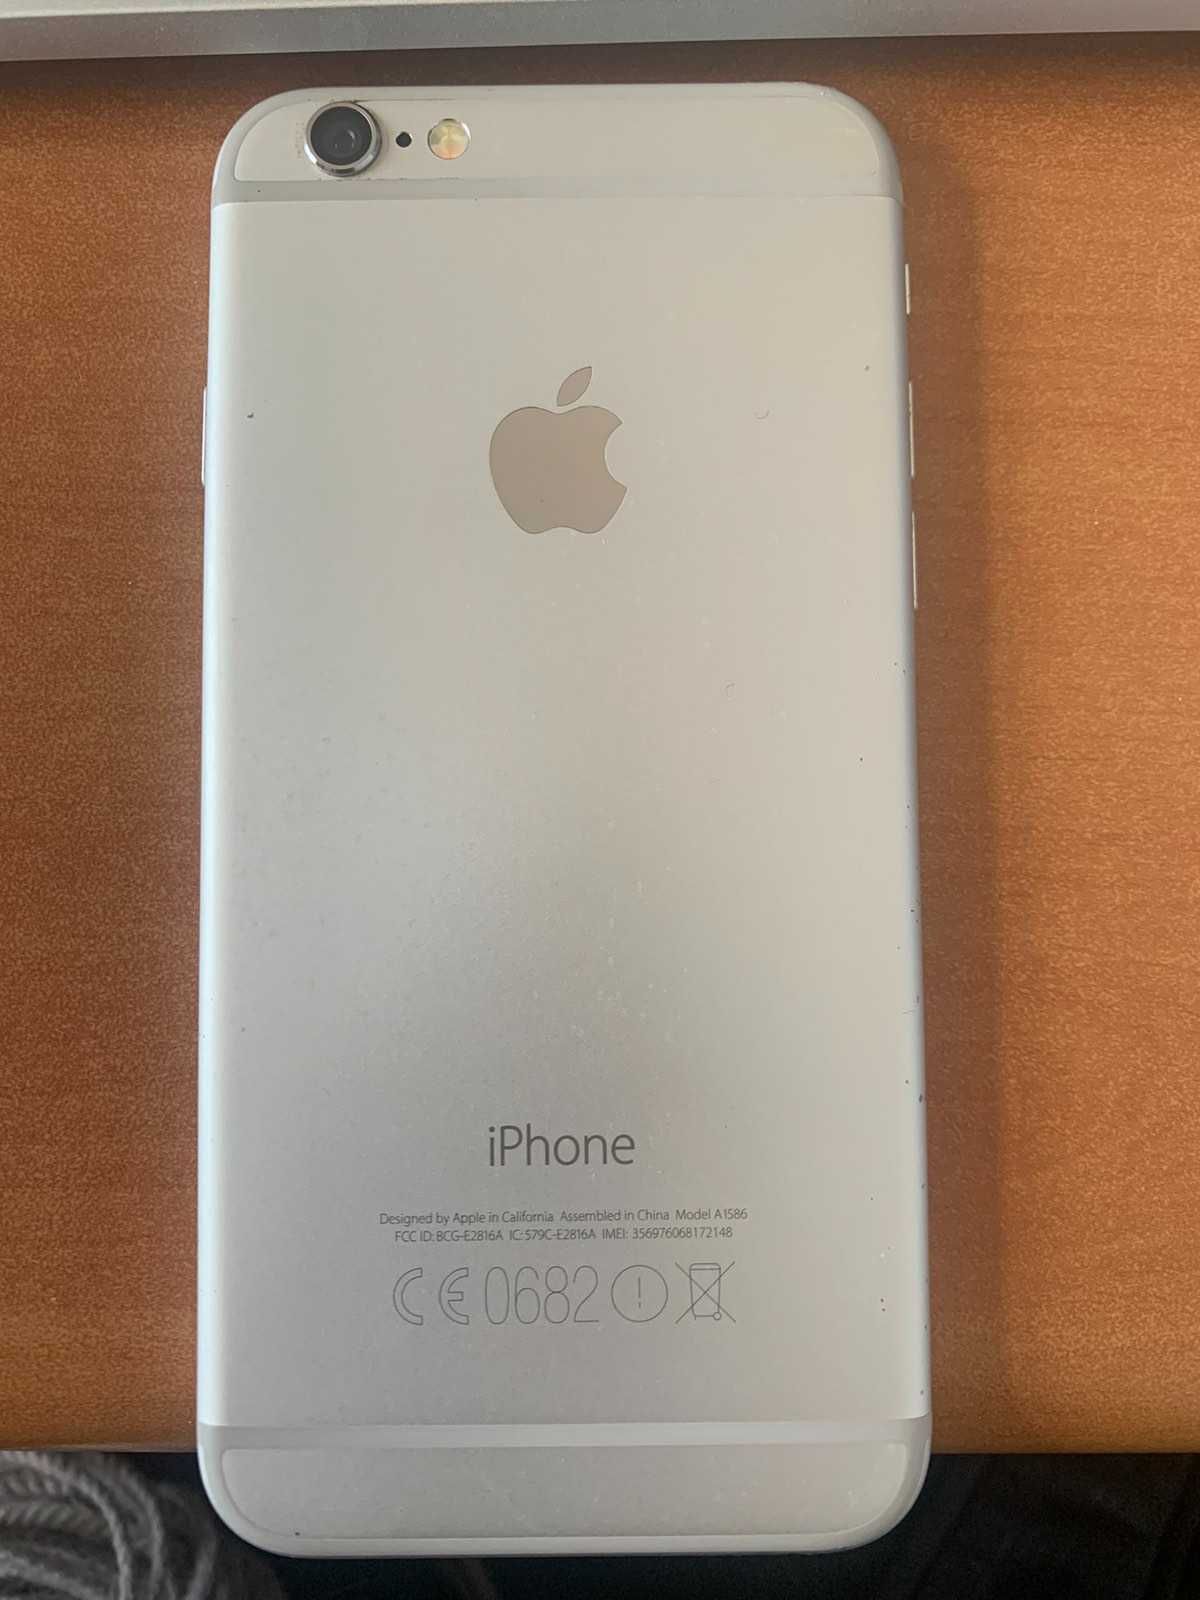 iPhone 6, 16 GB Space Gray (сребърен), 100% Battery Health